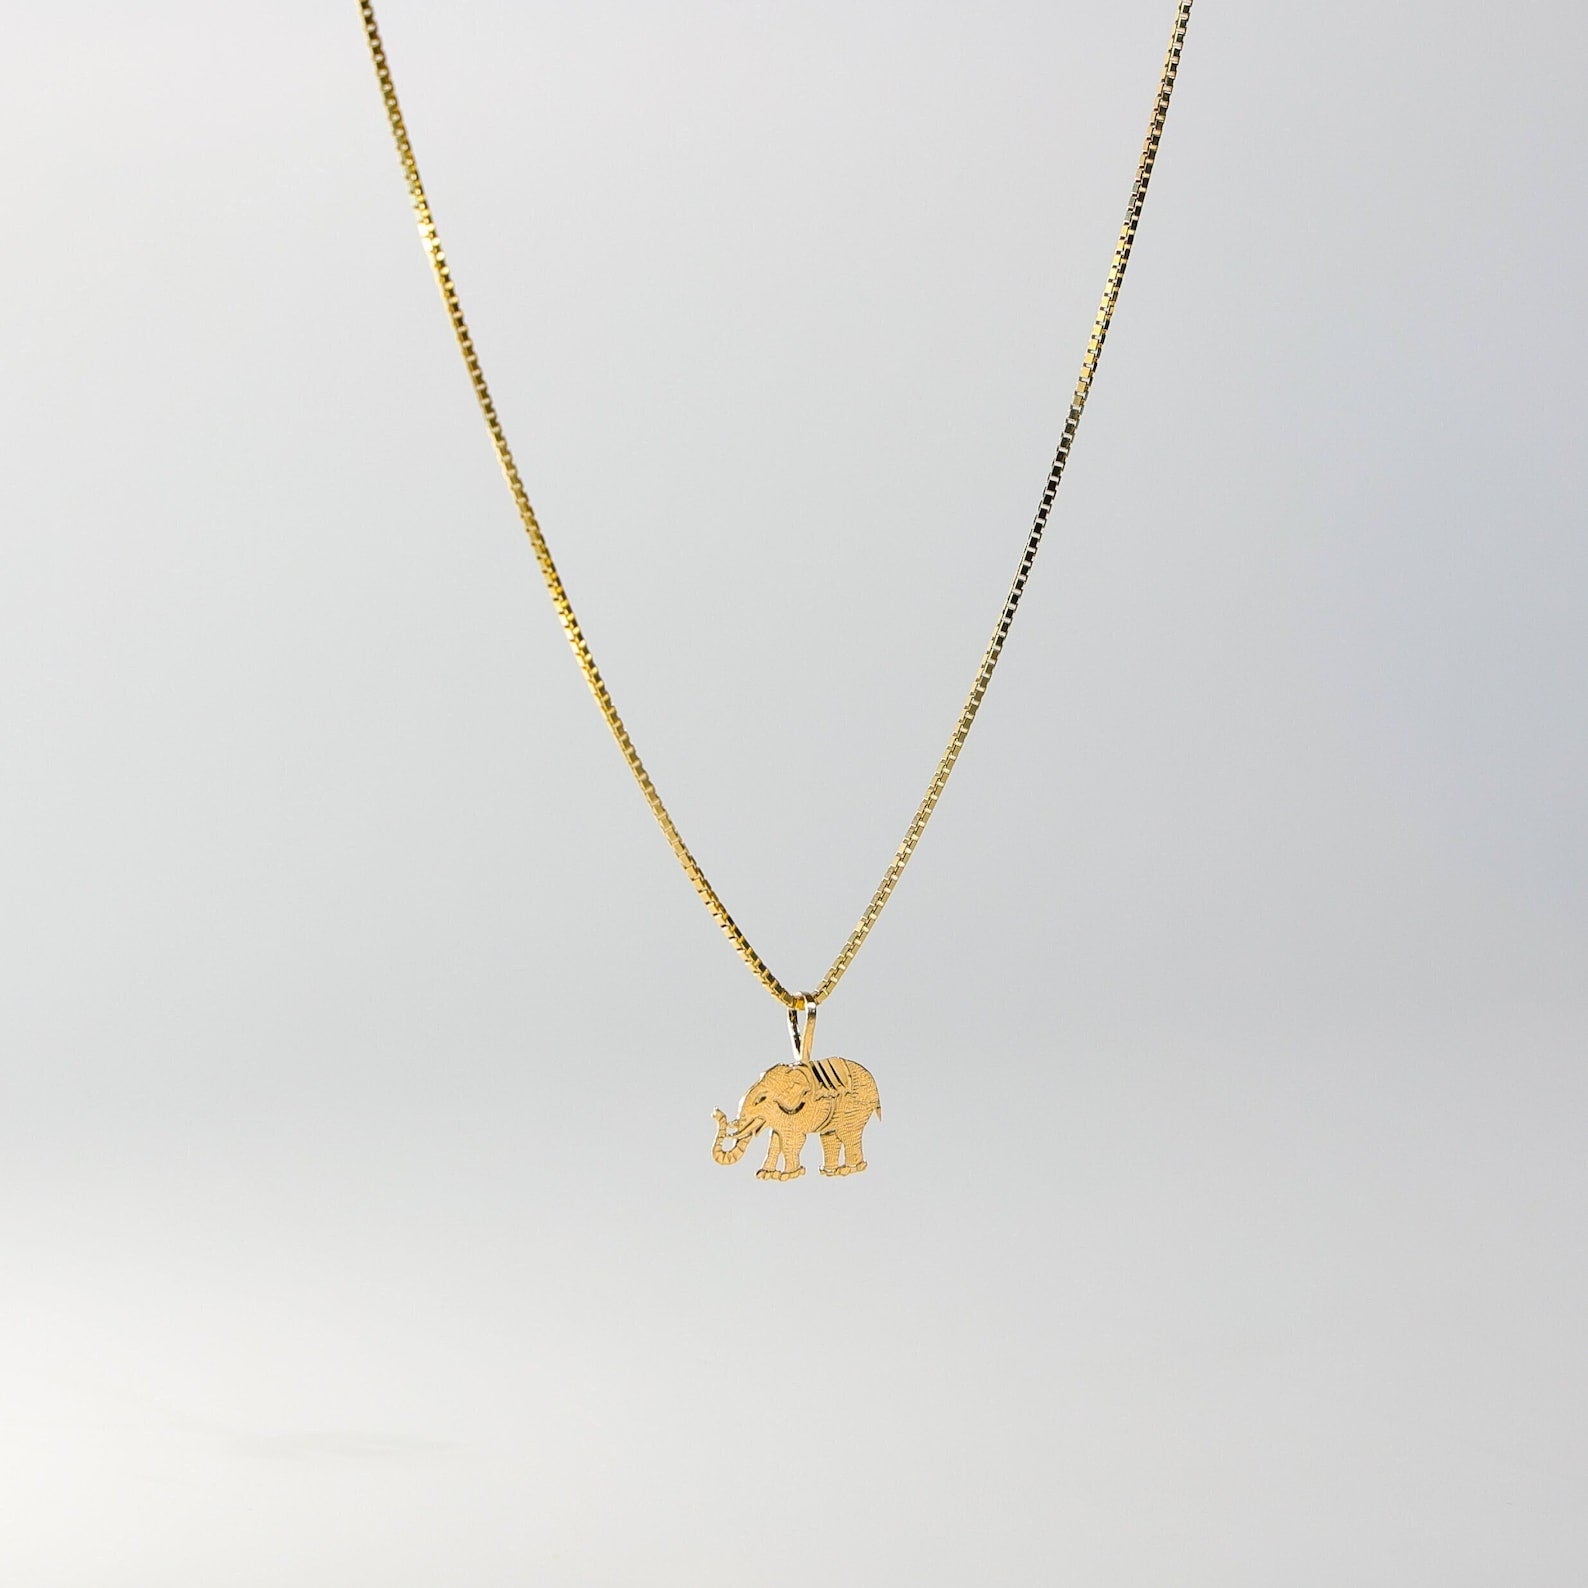 Gold Dainty Elephant Charm Model-1629 - Charlie & Co. Jewelry